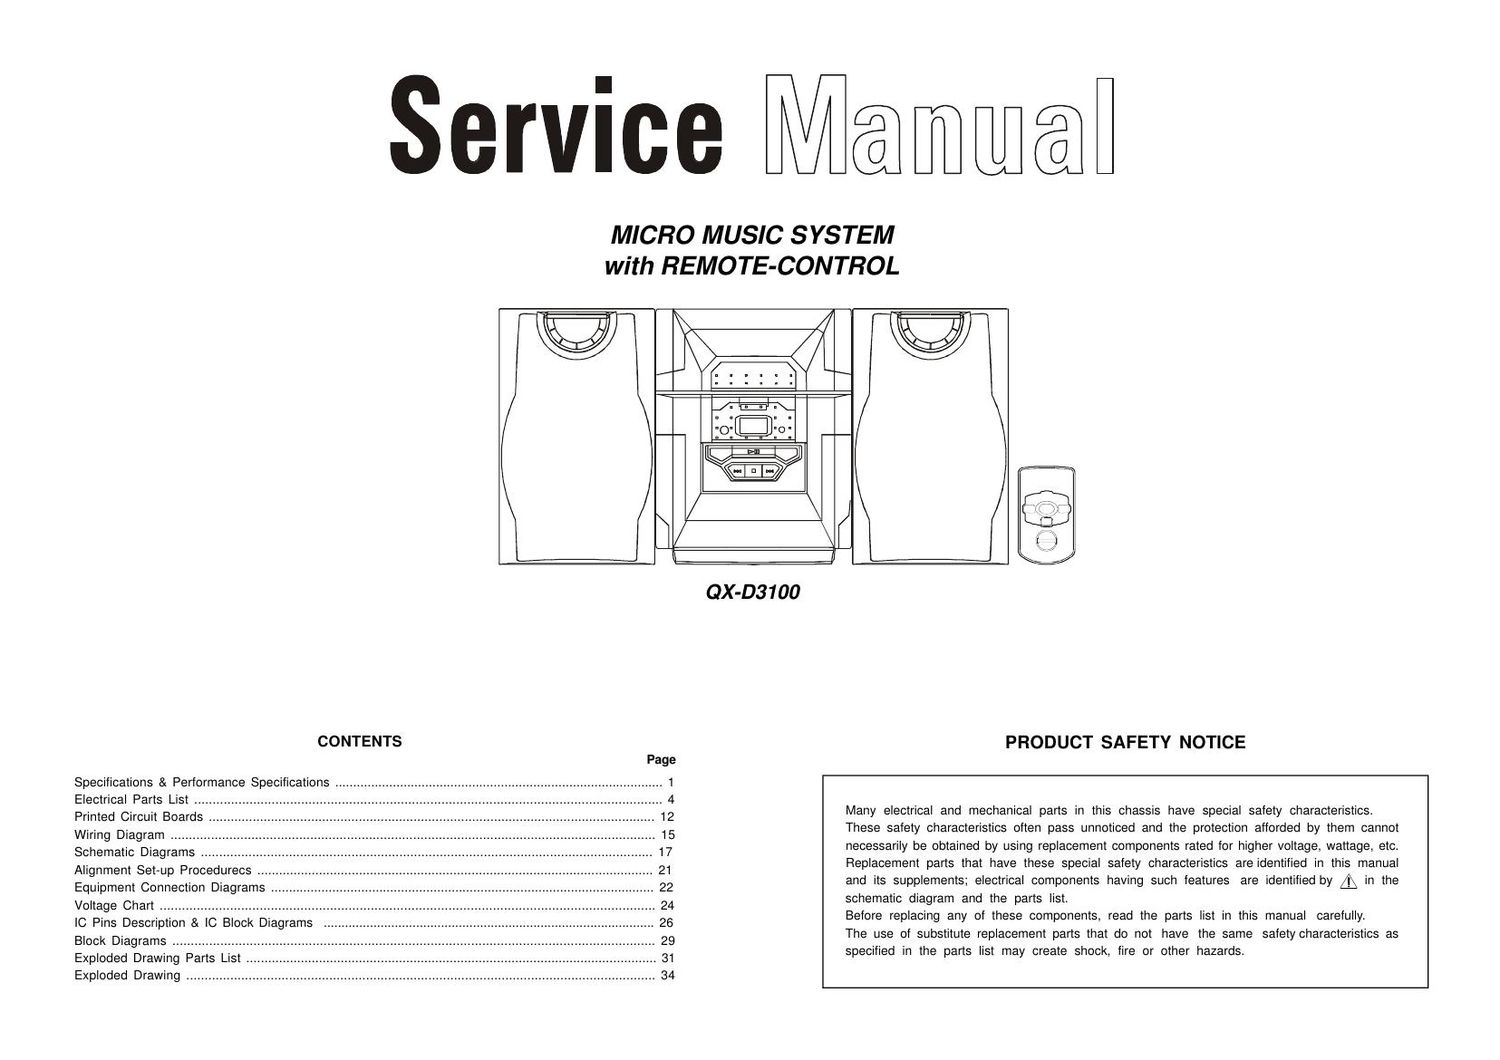 Akai QXD 3100 Service Manual